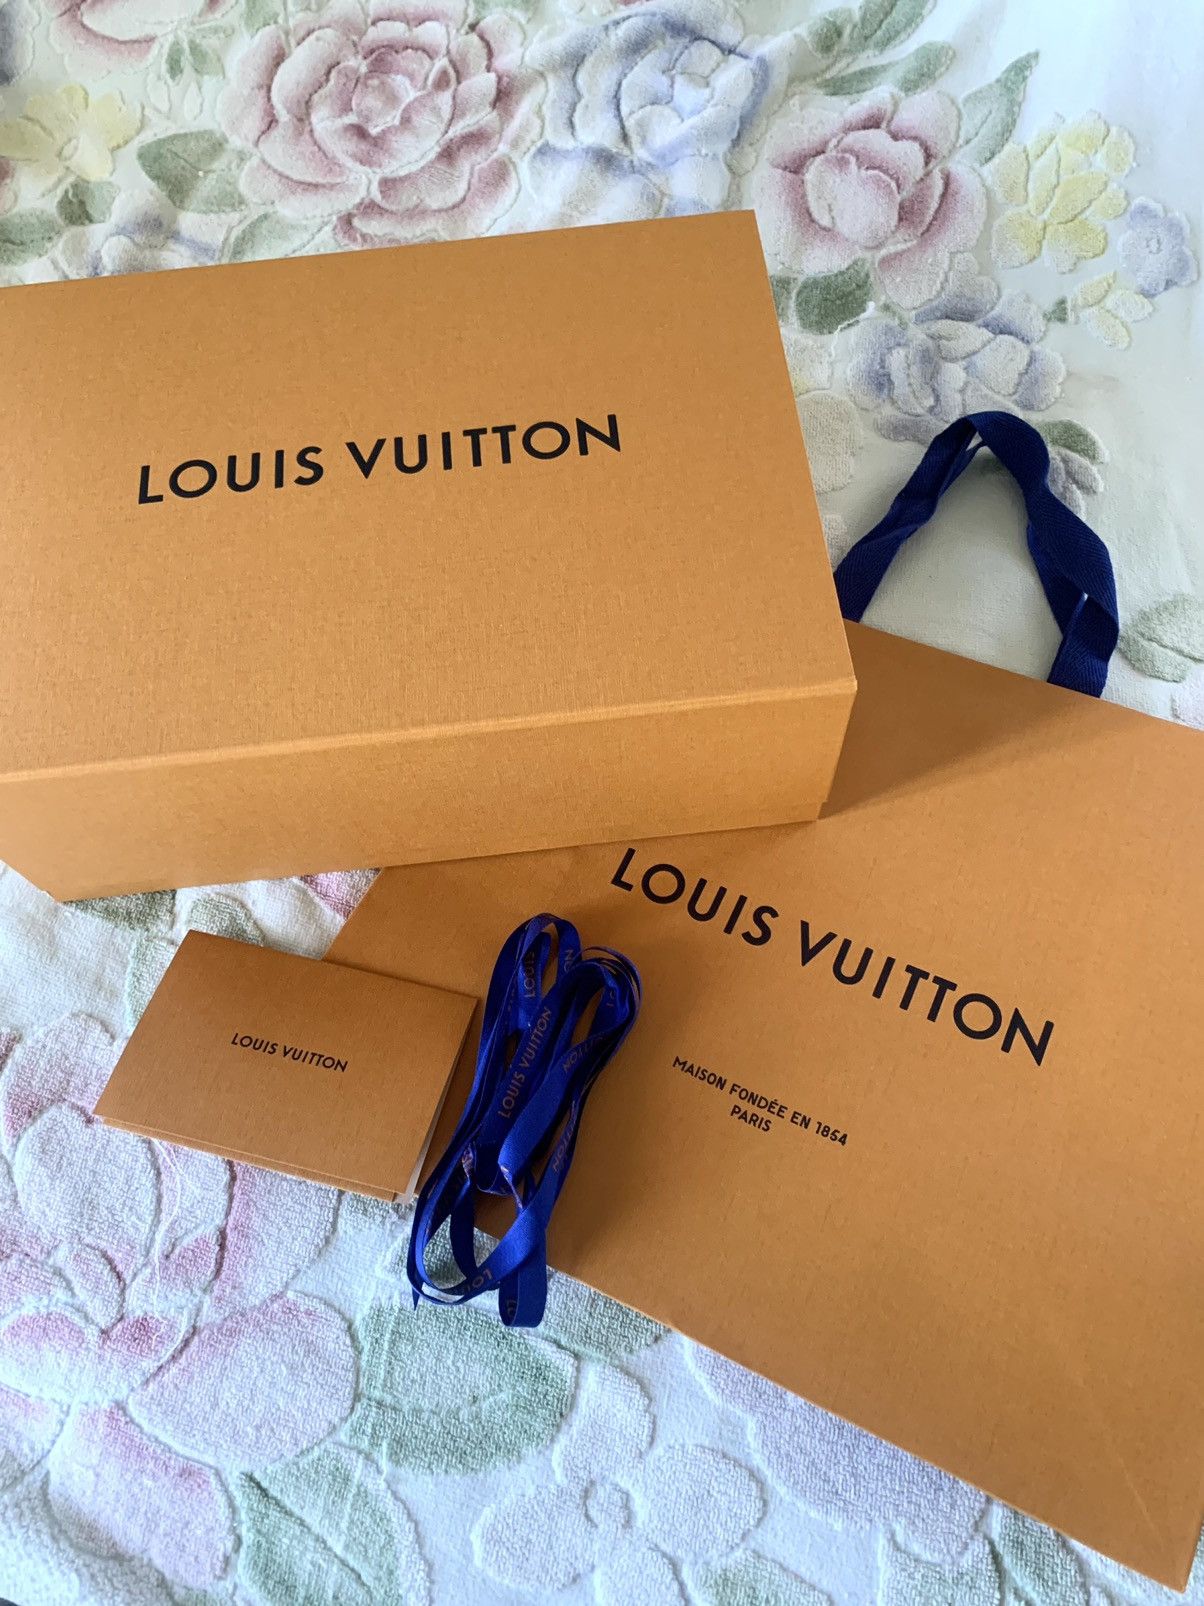 Louis Vuitton LOUISVUITTON Size: 33 inch 22AW DESTROYED CARPENTER BELL  BOTTOM DENIM RM222 JE0 HND90W Destroyed Carpenter Bell Bottom Denim Pants